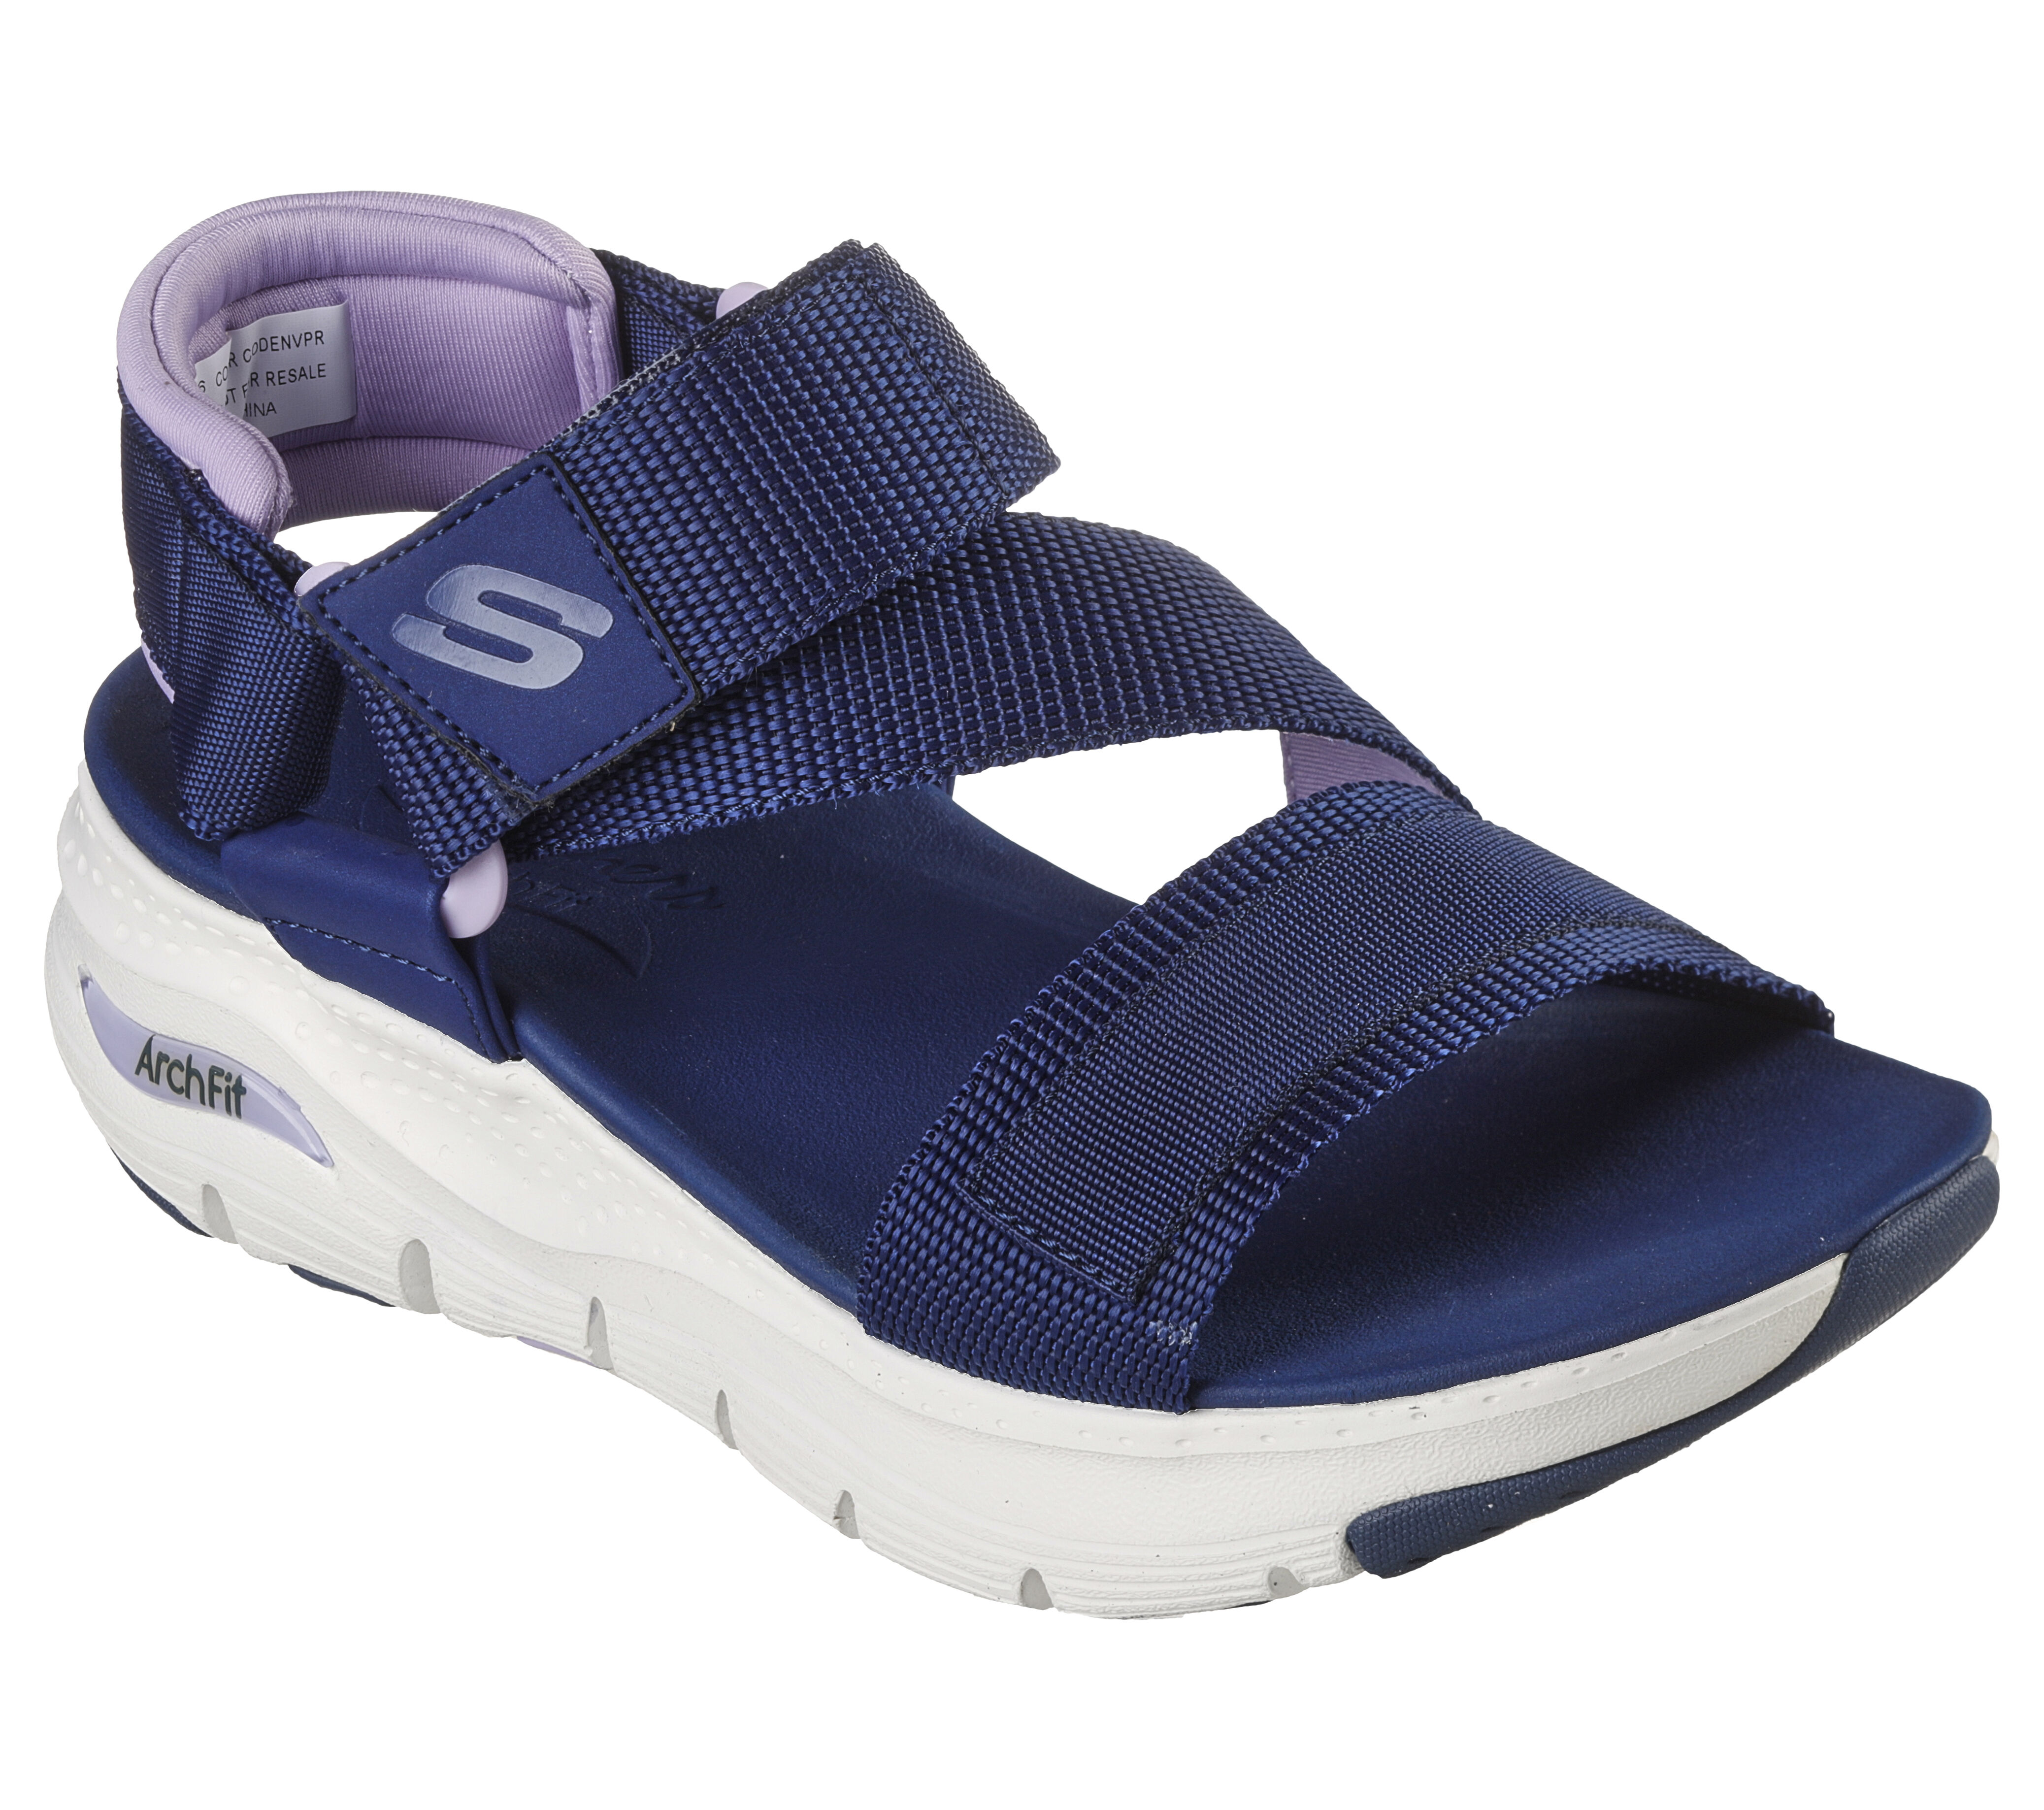 discontinued skechers women's sandals